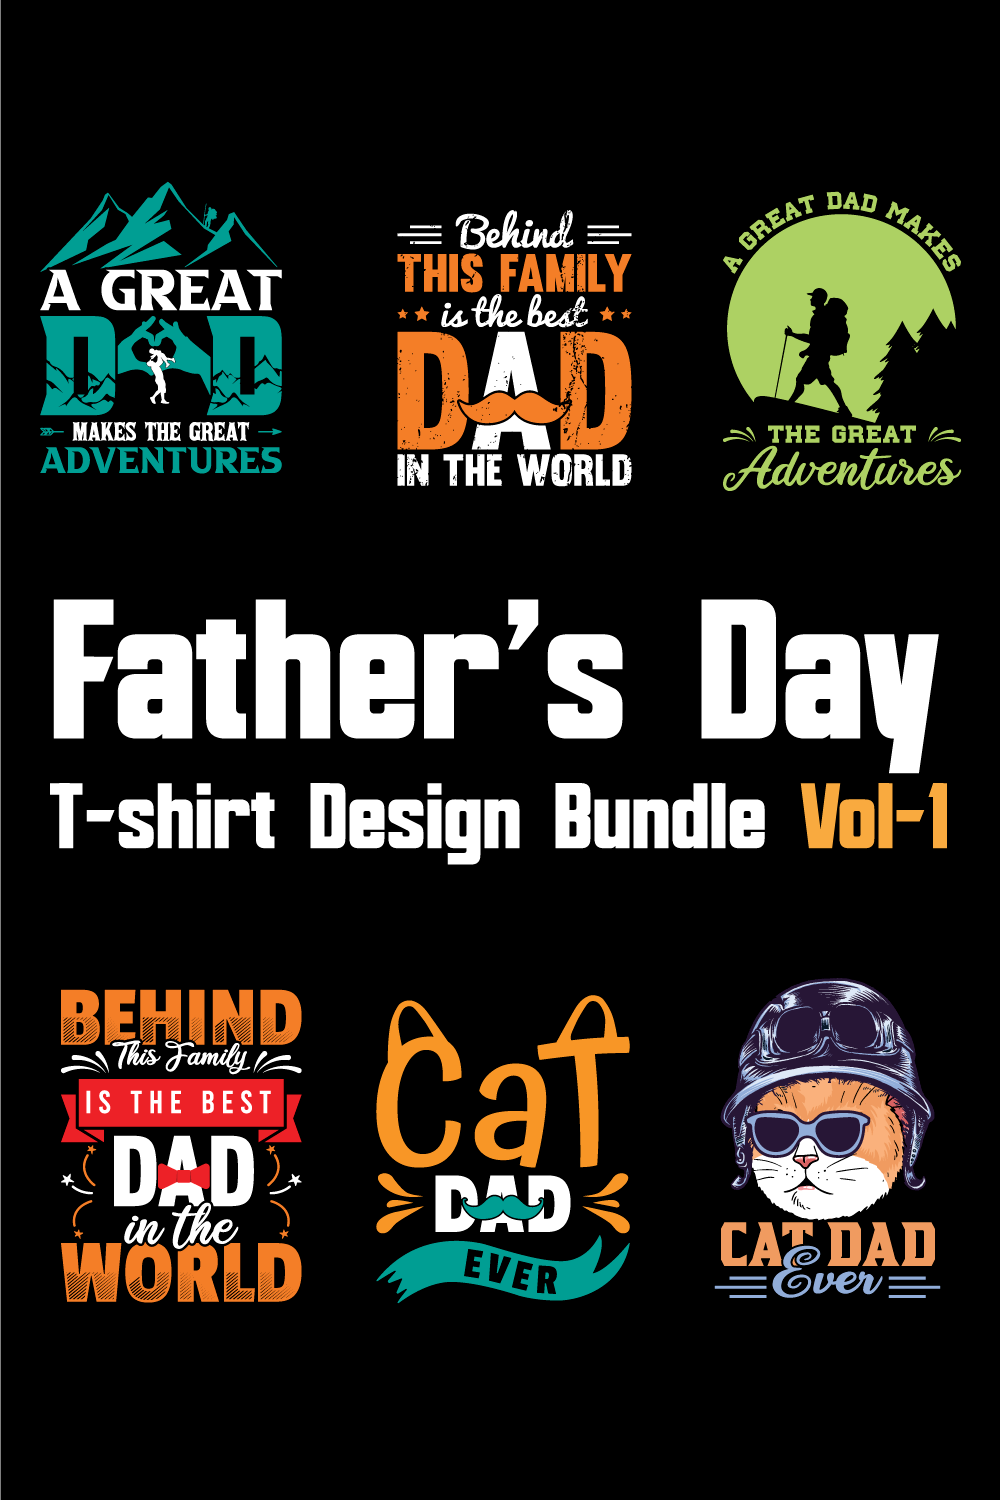 Father's Day T-shirt Design Bundle Vol-1 pinterest preview image.